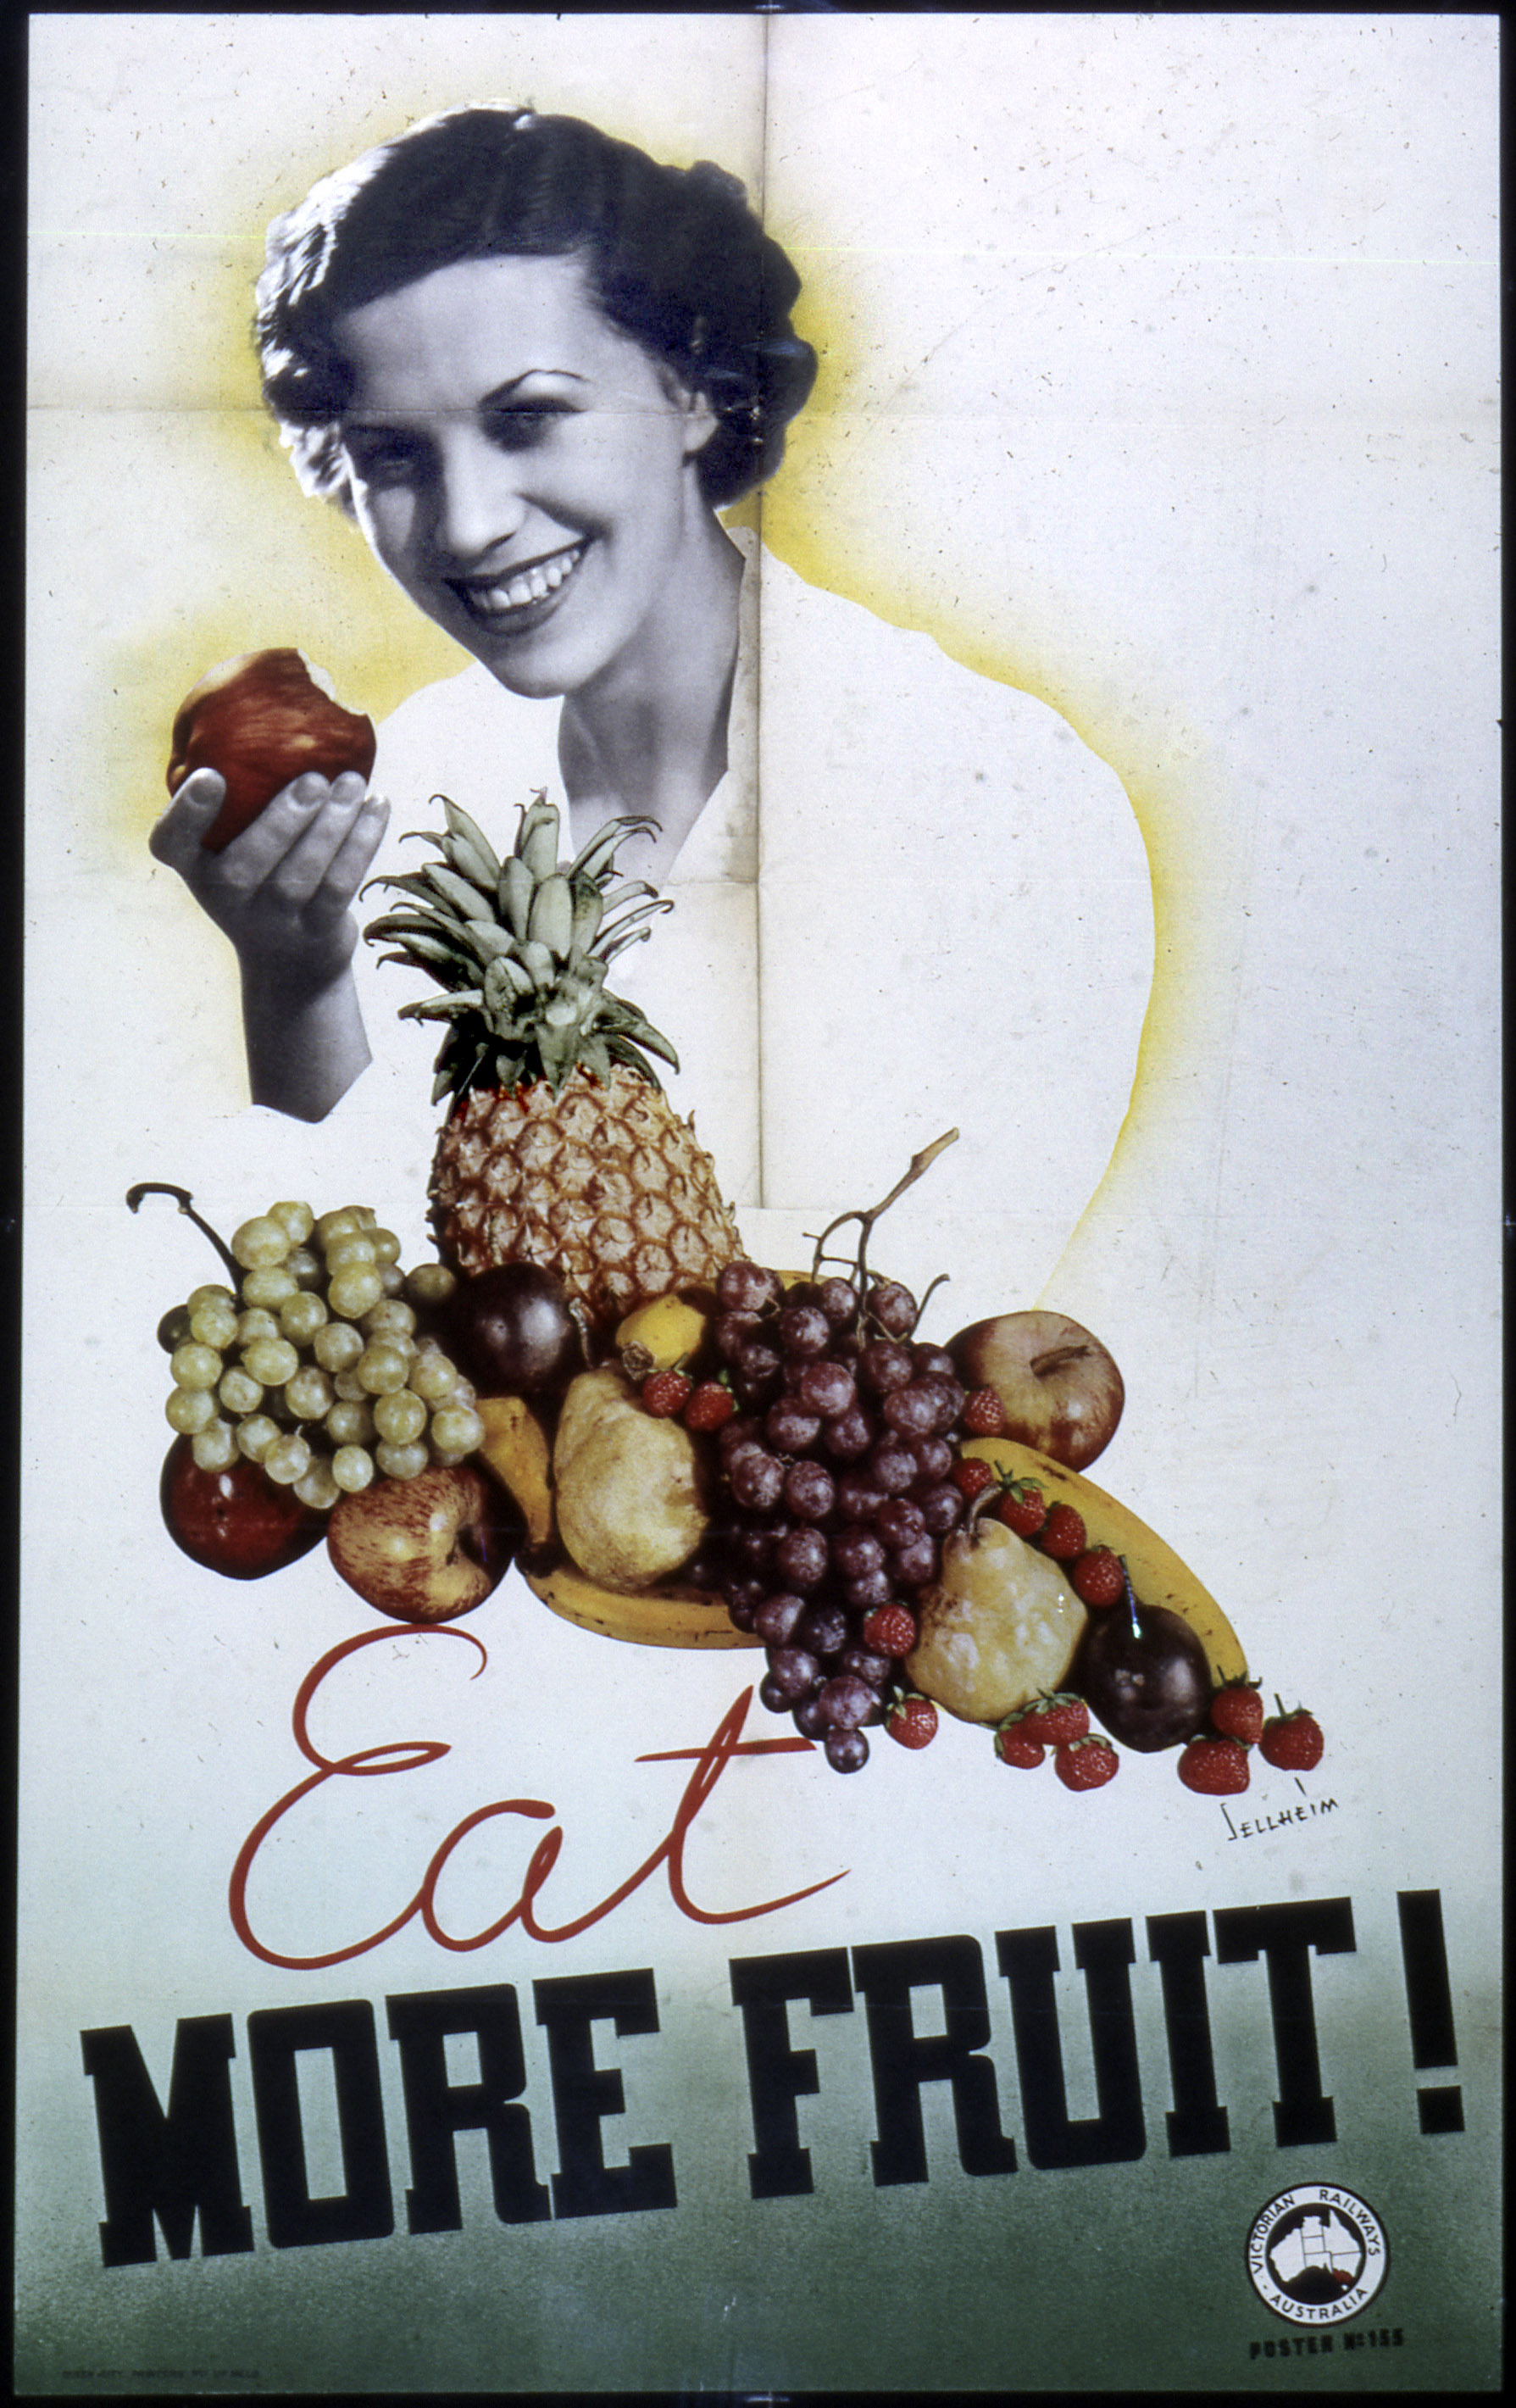 Eat More Fruit poster by Gert Sellheim, circa 1930s